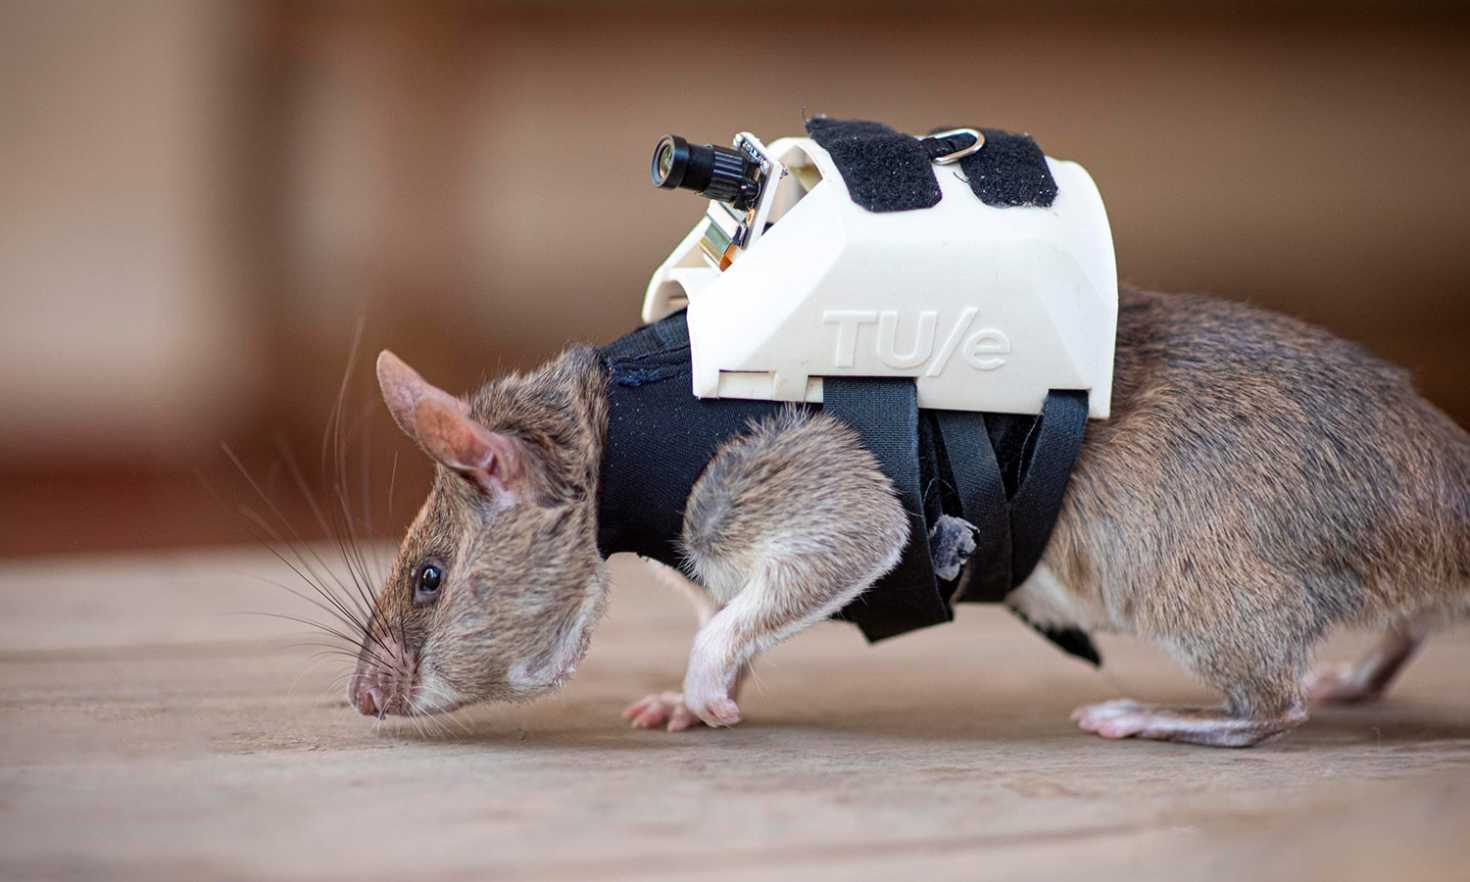 Rescue rat for APOPO